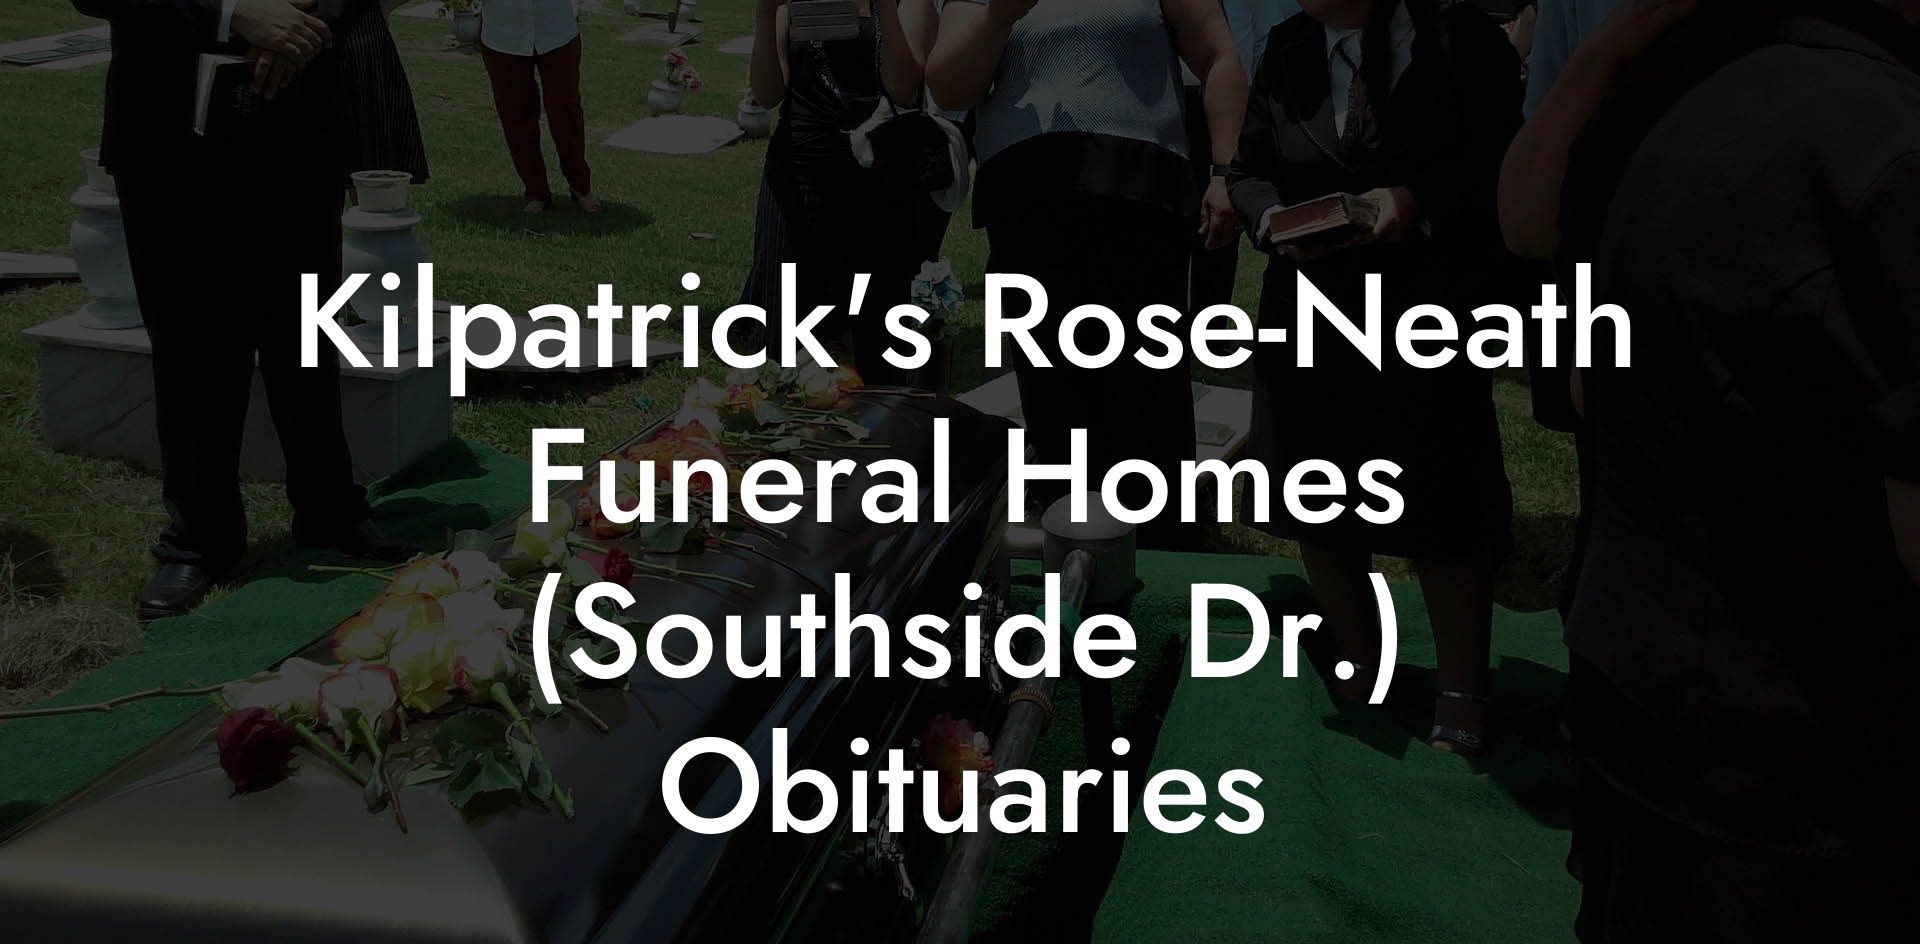 Kilpatrick's Rose-Neath Funeral Homes (Southside Dr.) Obituaries